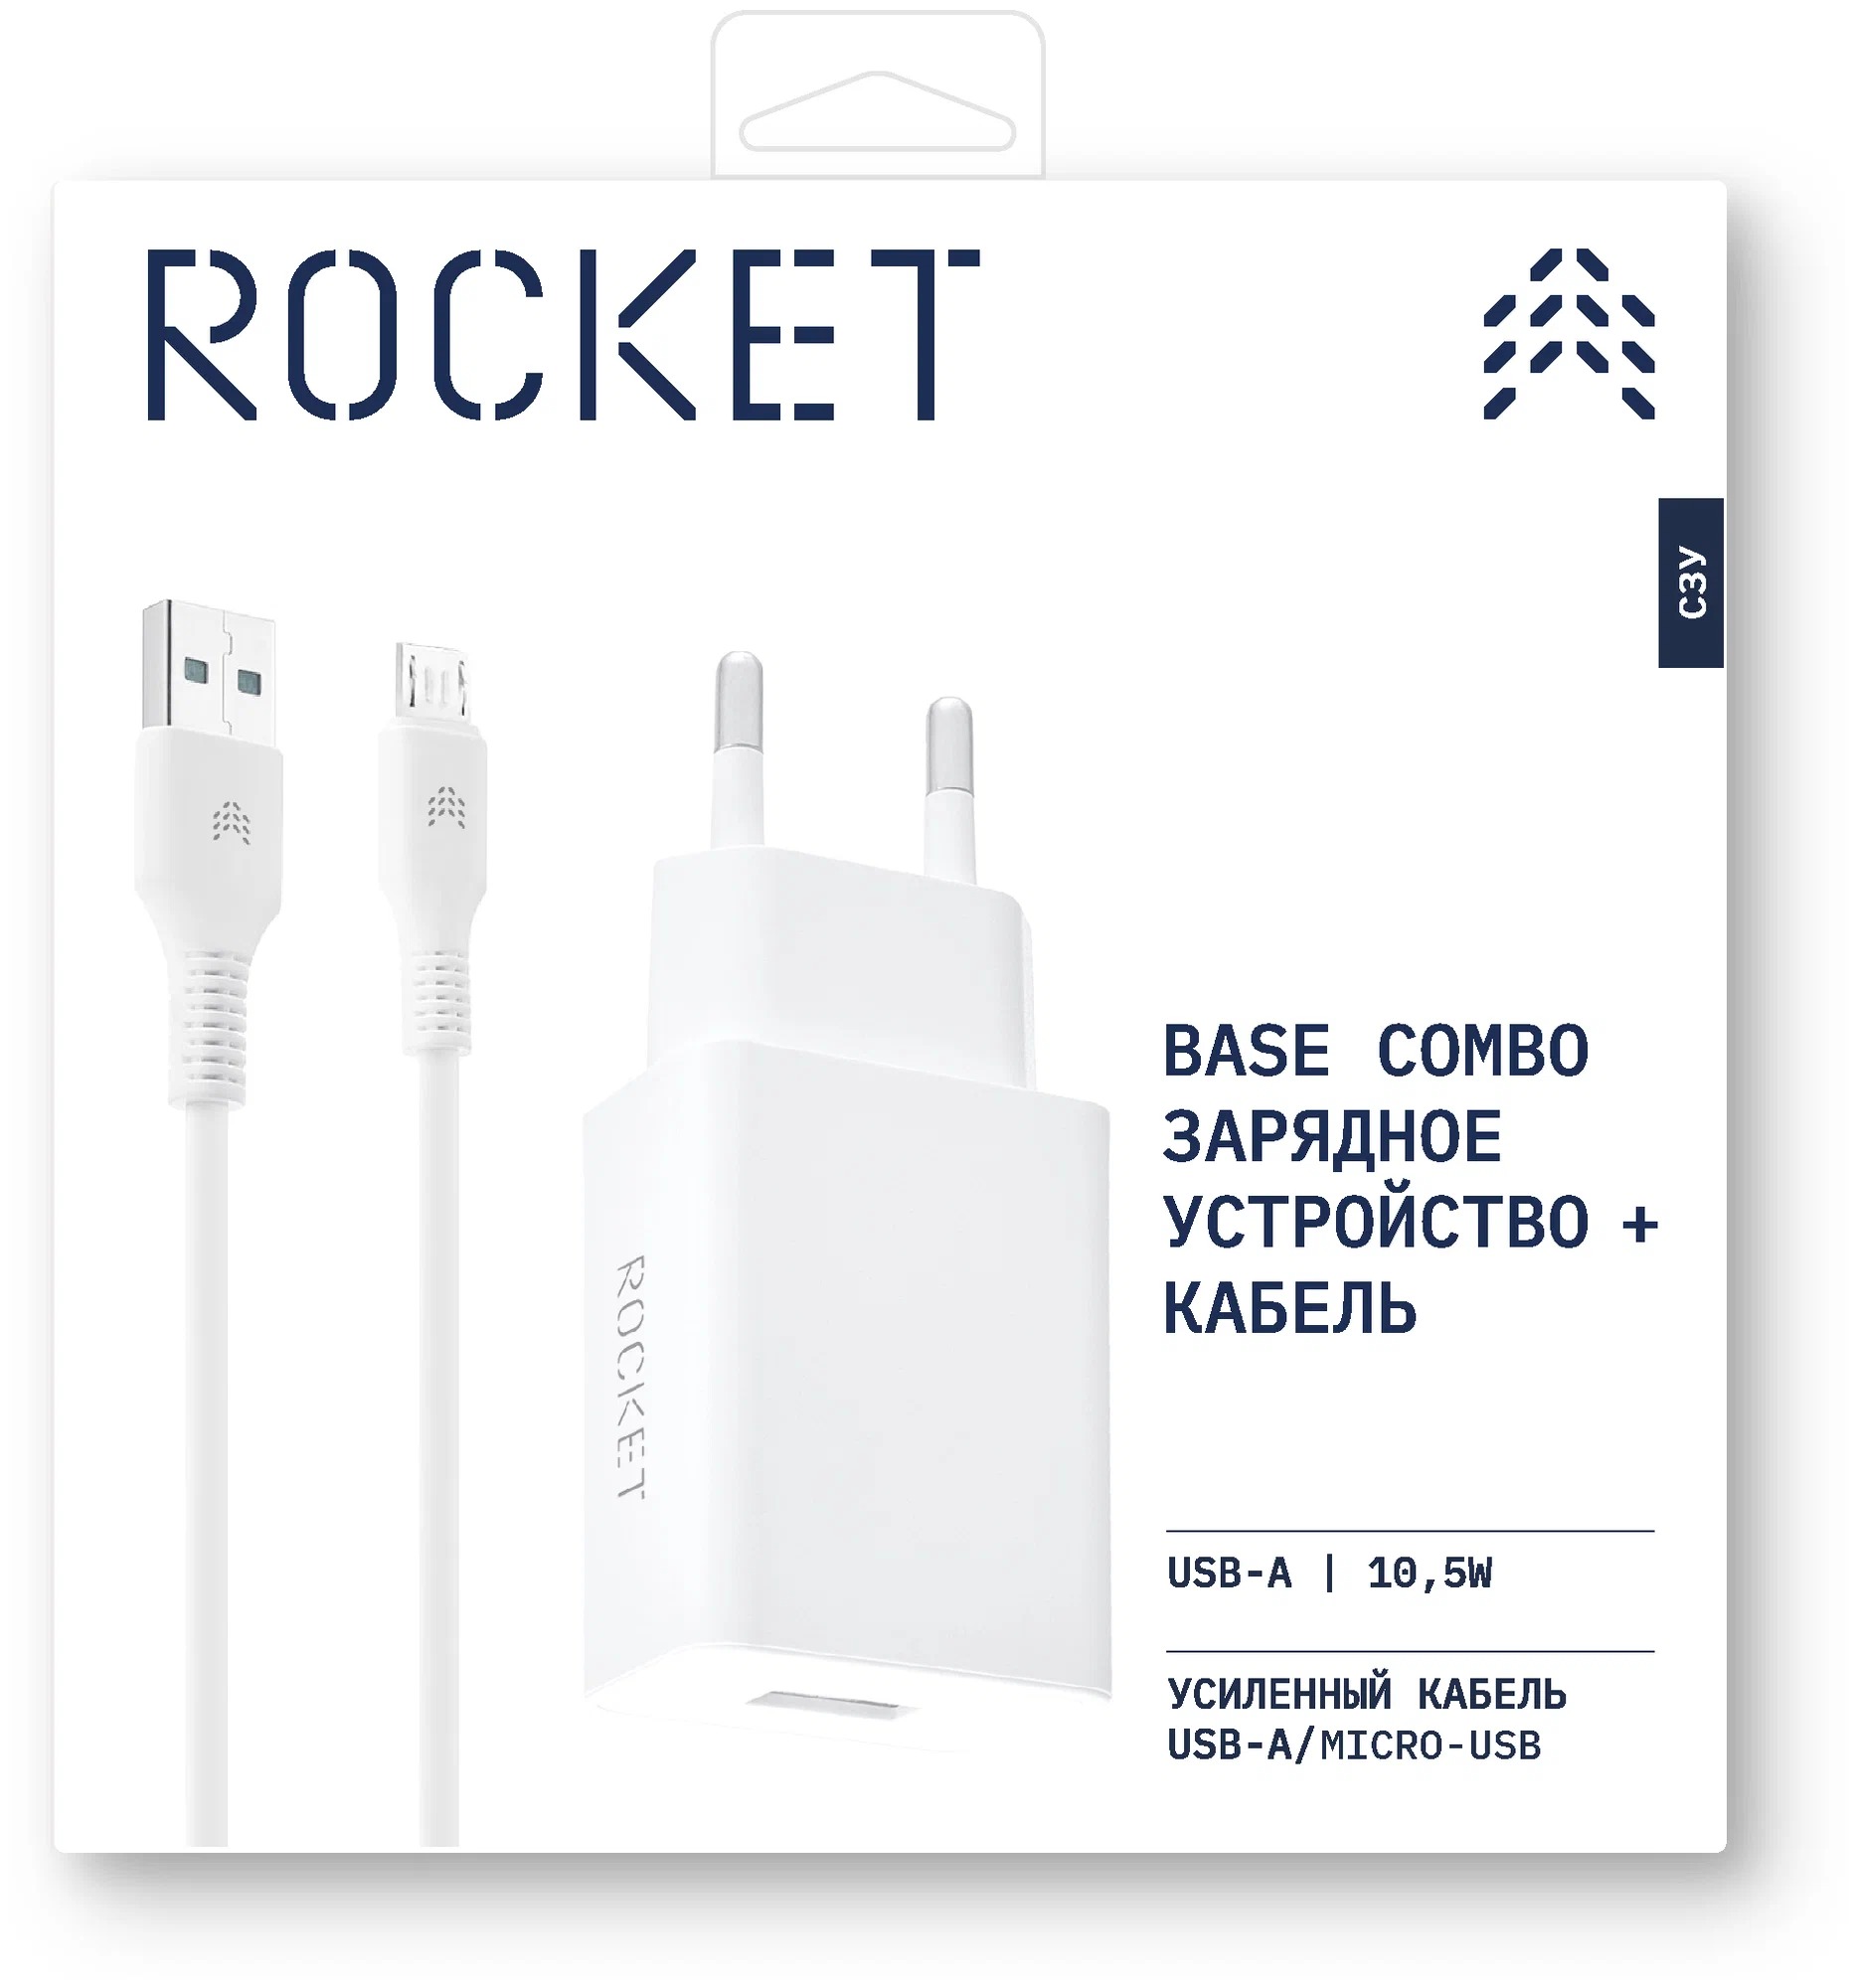 ROCKET Base Combo Сетевое зарядное устройство Base 10,5W, USB-A + кабель USB-A/Micro-USB, белый